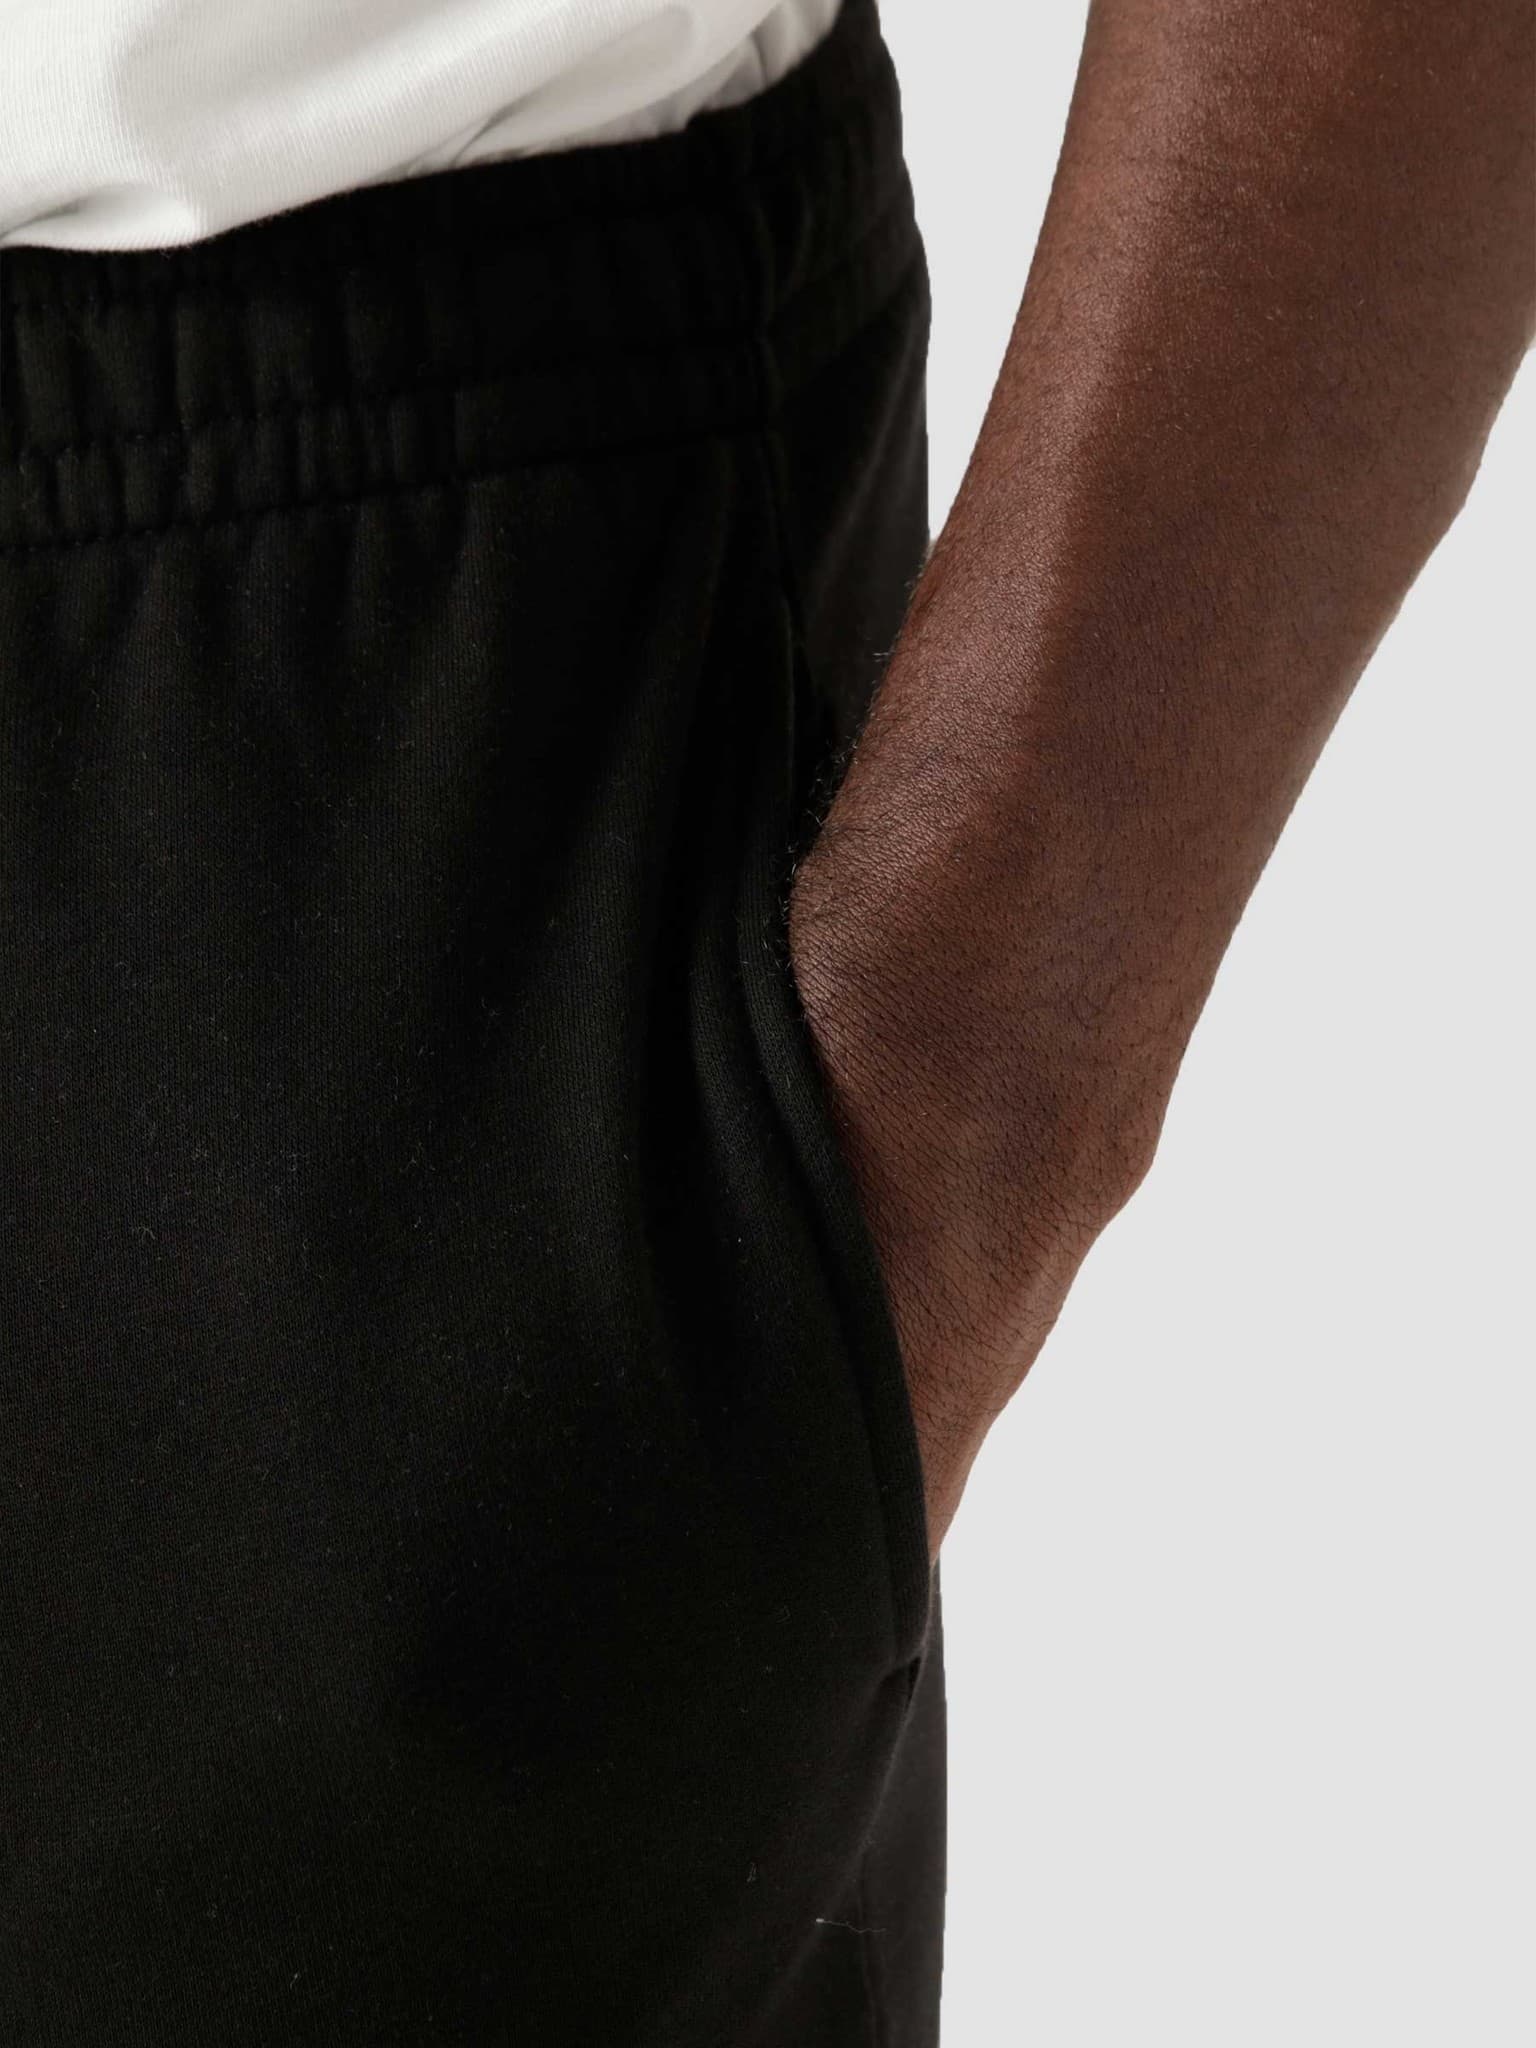 1HW2 Men's Tracksuit Trousers Black XH9507-11